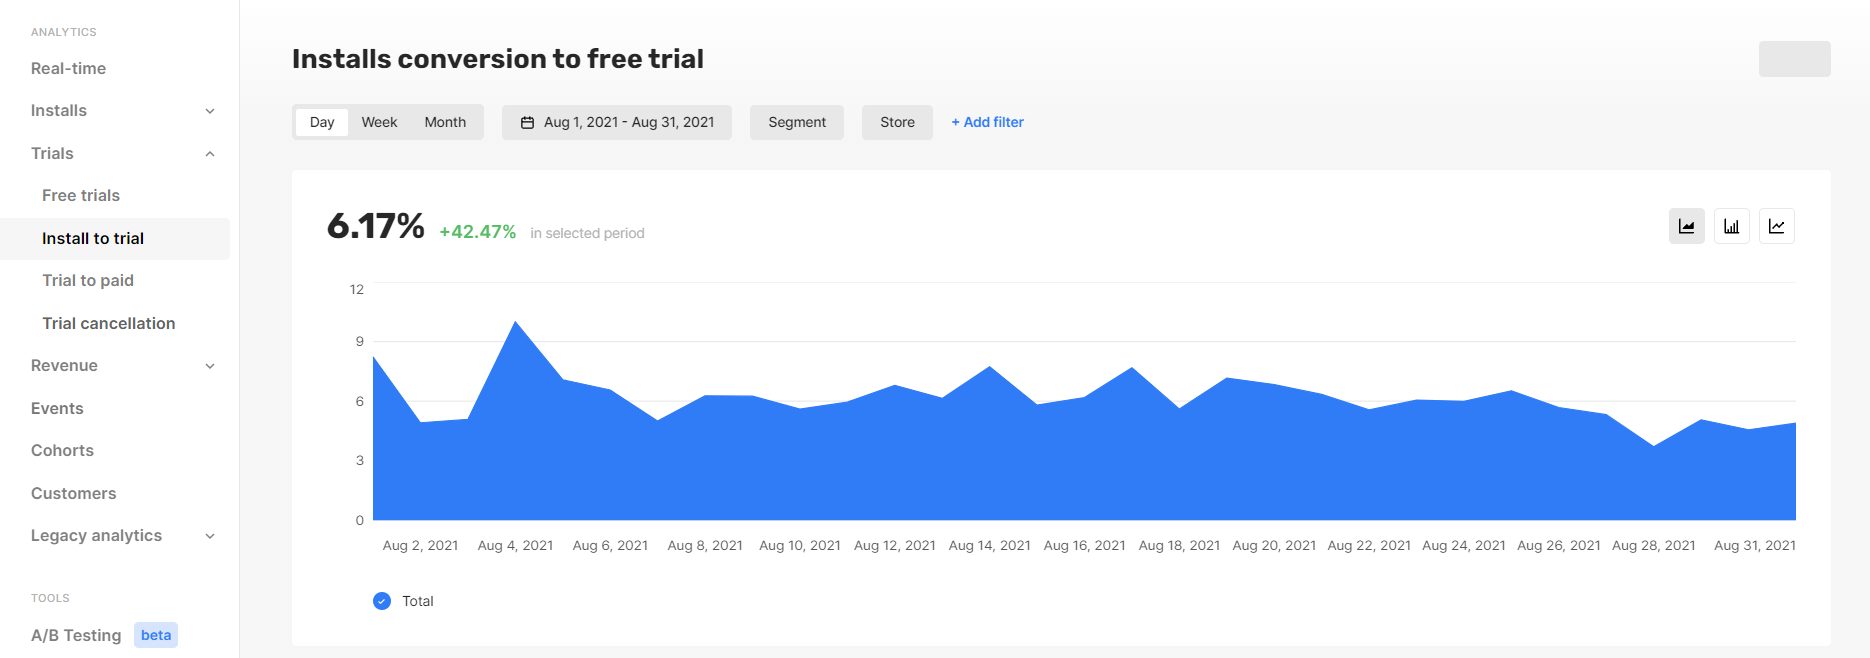 Install conversion to free trial - Mobile Analytics - Qonversion